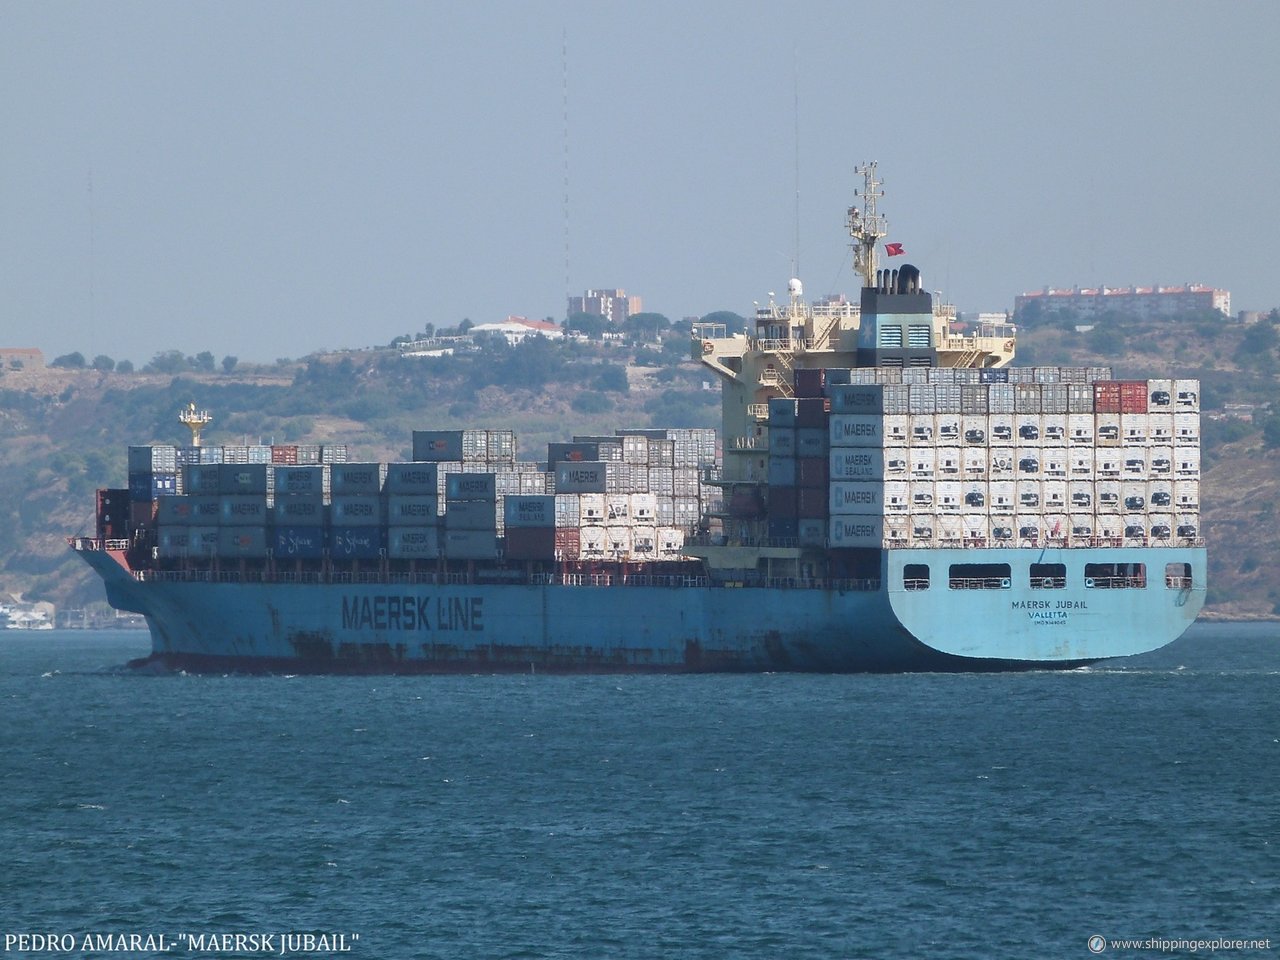 Maersk Jubail